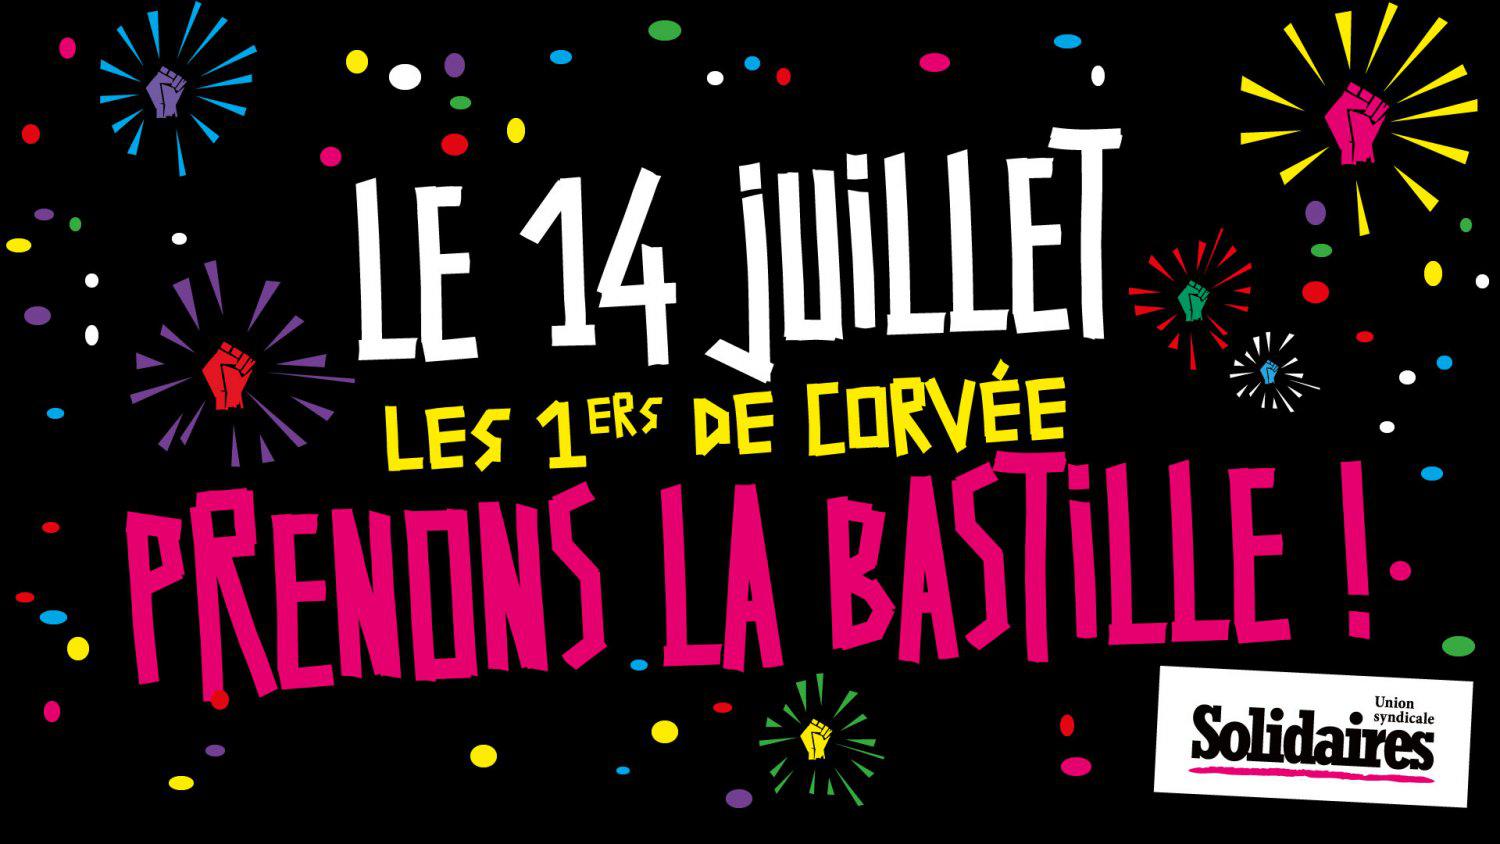 Le 14 juillet prenons la Bastille